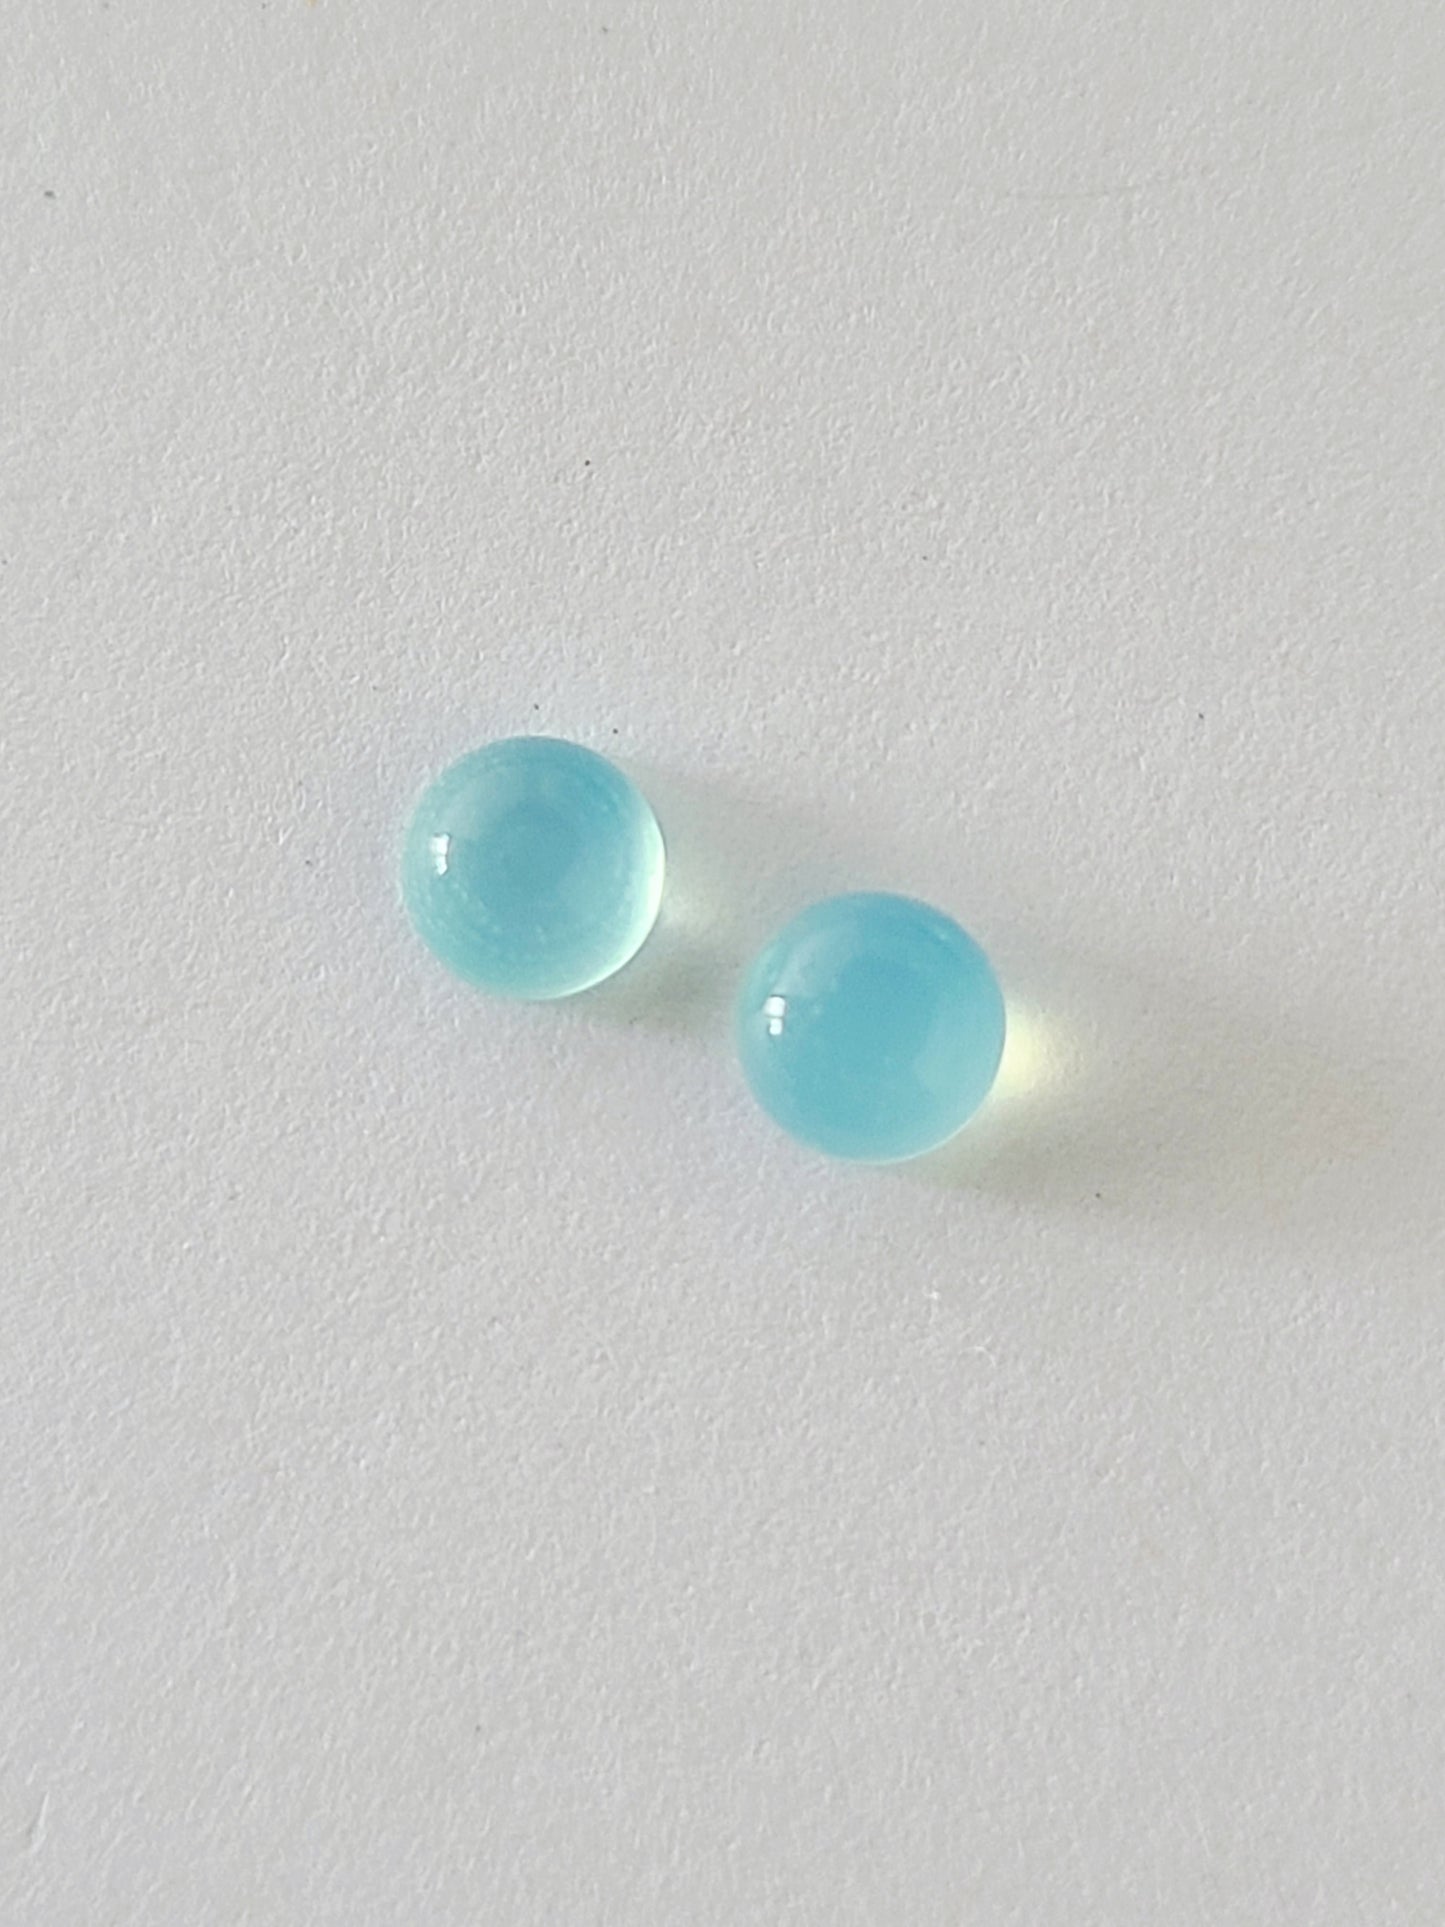 Cupped Gems Stud Earrings Choose Your Stone- 5mm gemstones